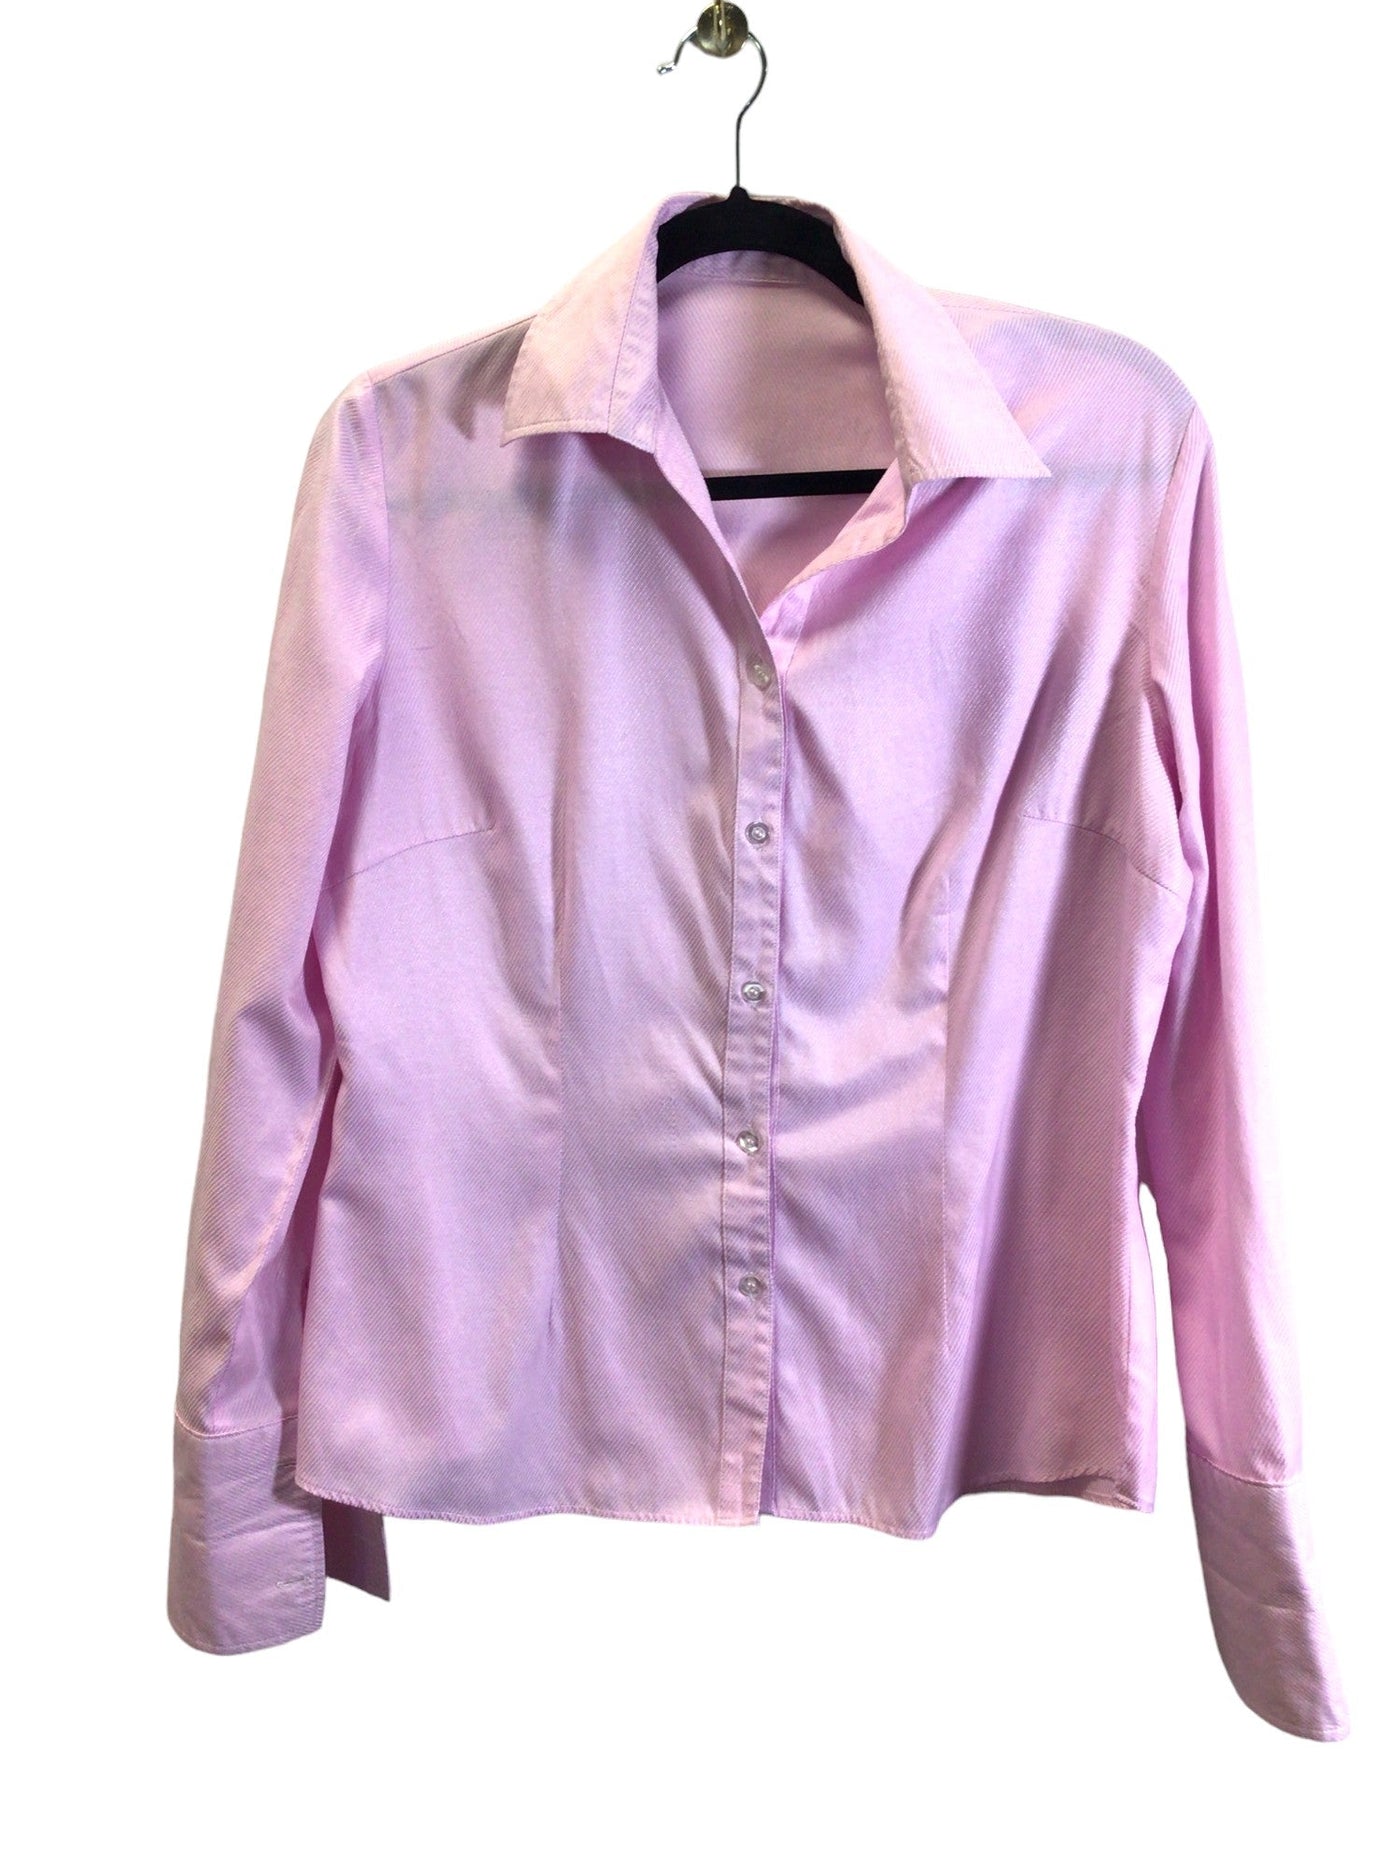 UNBRANDED Women Button Down Tops Regular fit in Pink - Size S | 9.99 $ KOOP